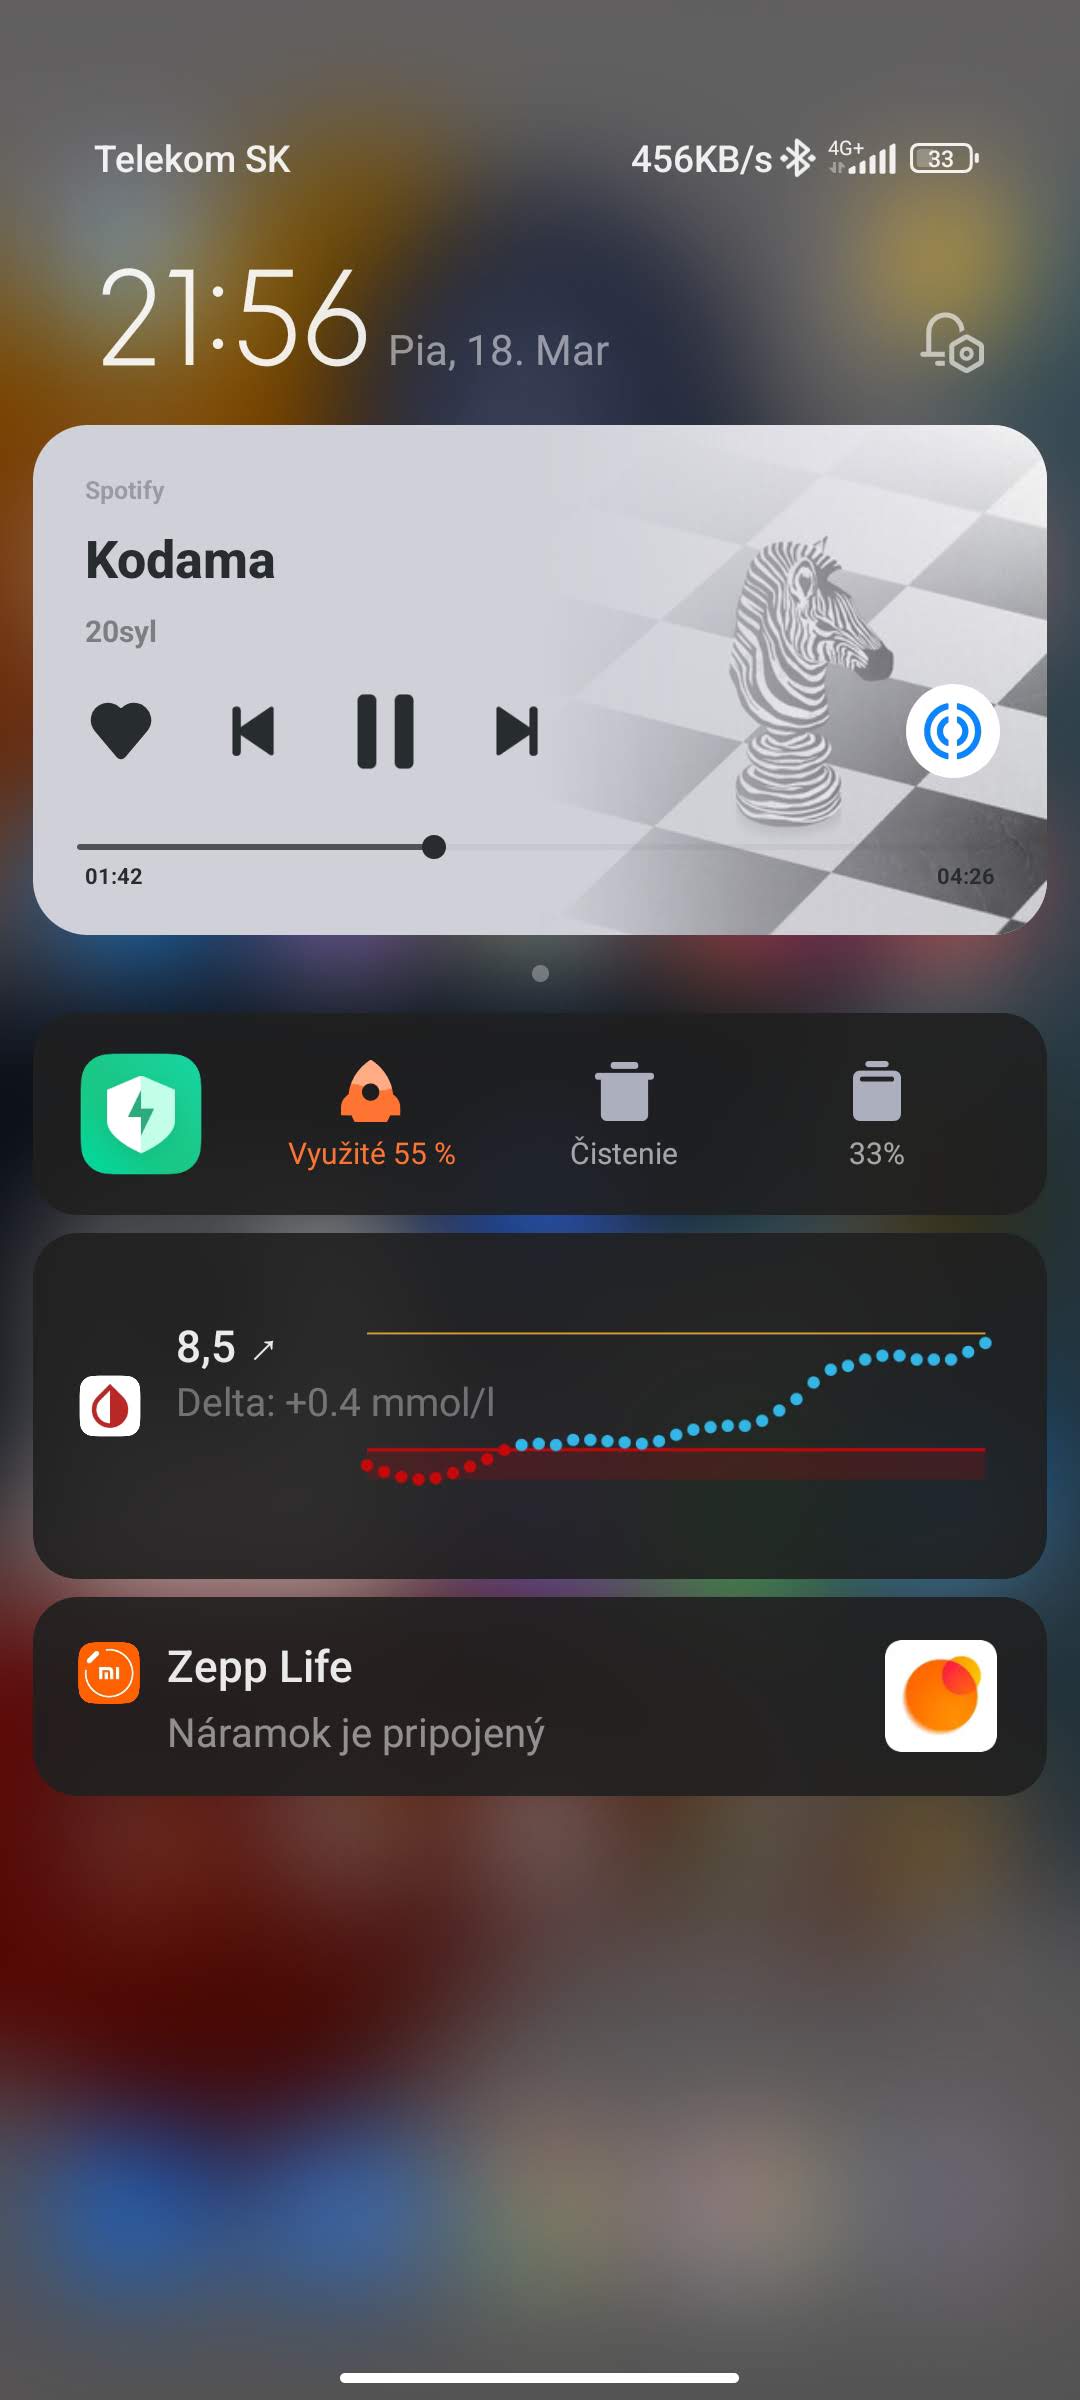 Xiaomi zepp life. Zepp Life mi Fit. Виджет Zepp Life. Zepp Life mi Fit 4pda. Ми фит часы приложение.